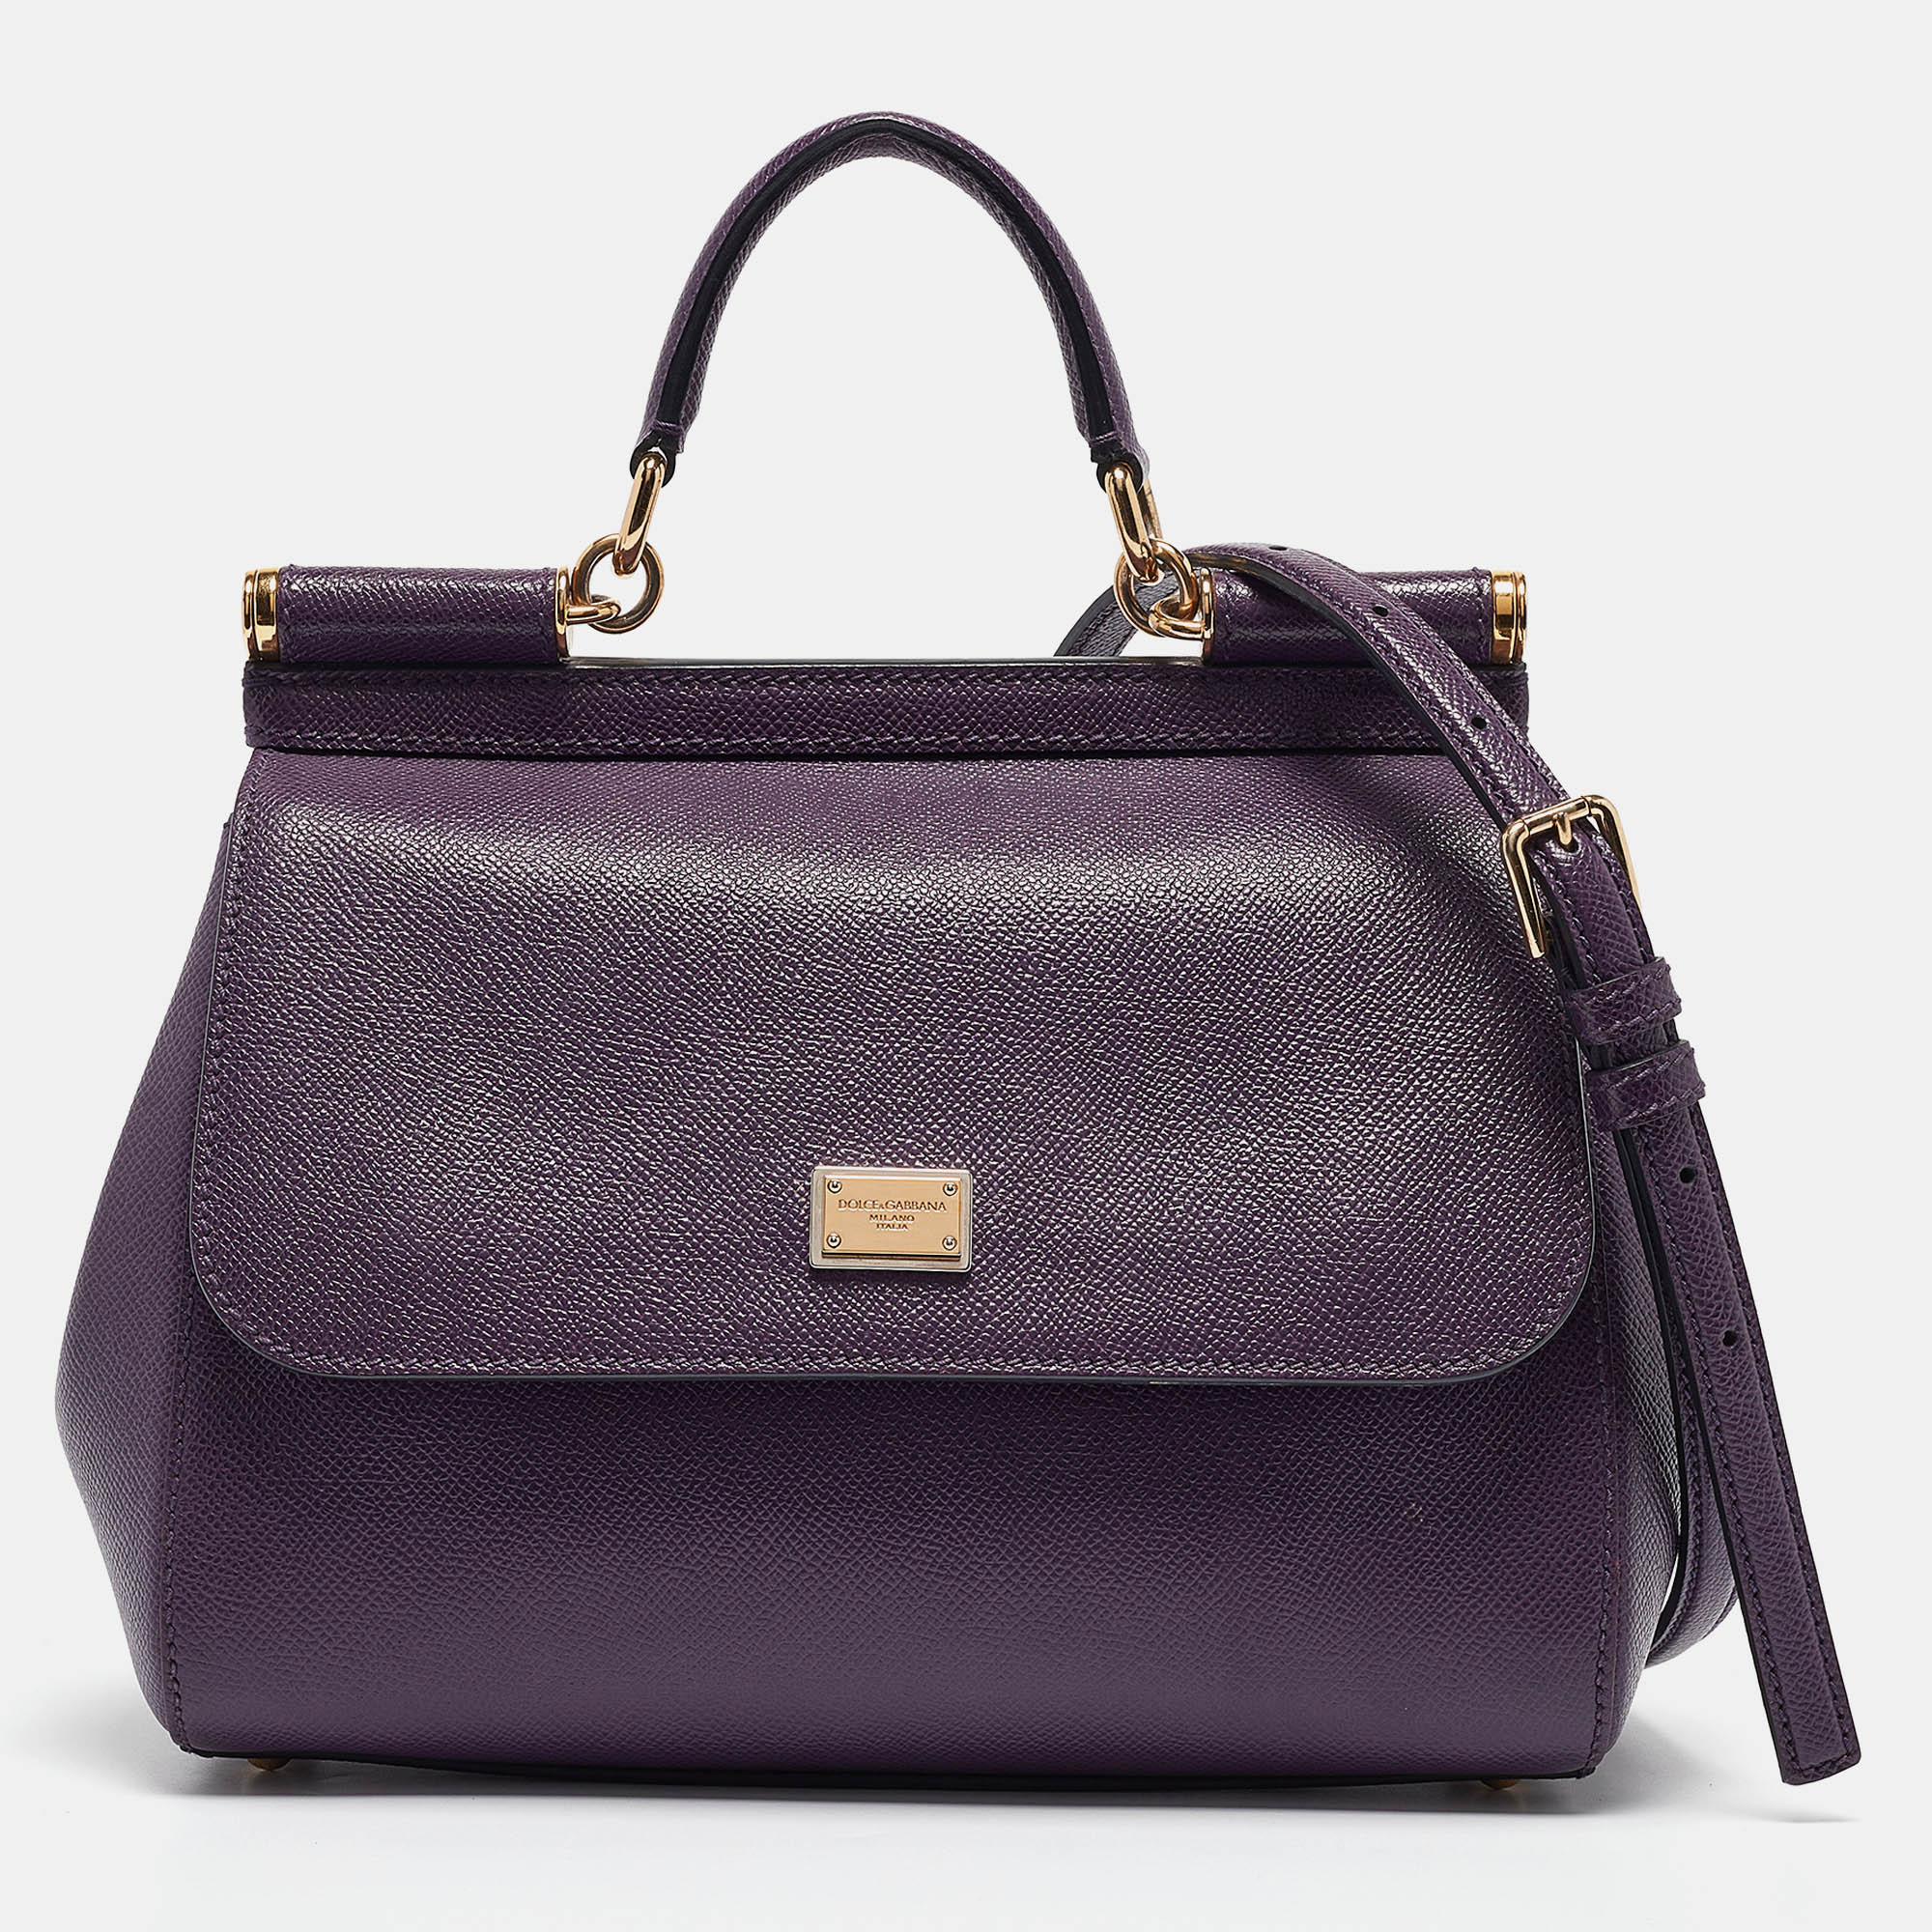 Dolce & gabbana purple leather medium miss sicily top handle bag